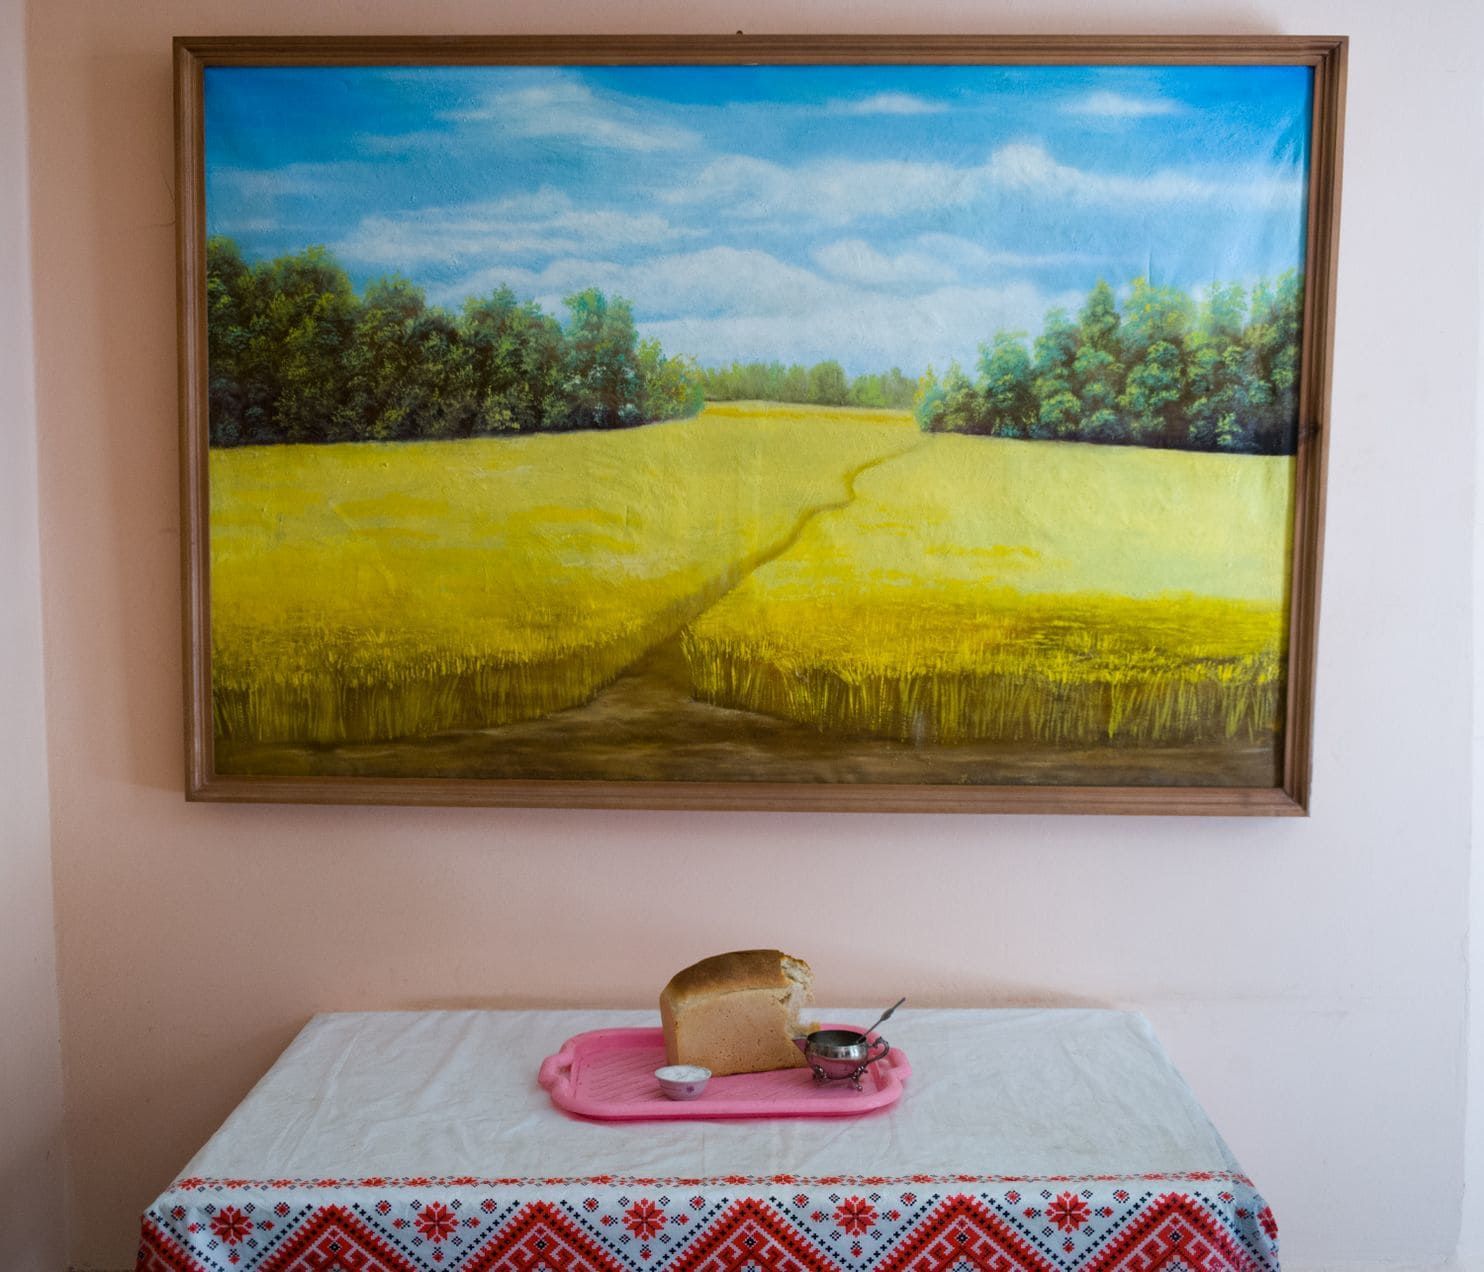 Bakery in a pre-trial detention center in Kharkiv. Image by Misha Friedman. Ukraine, 2019.